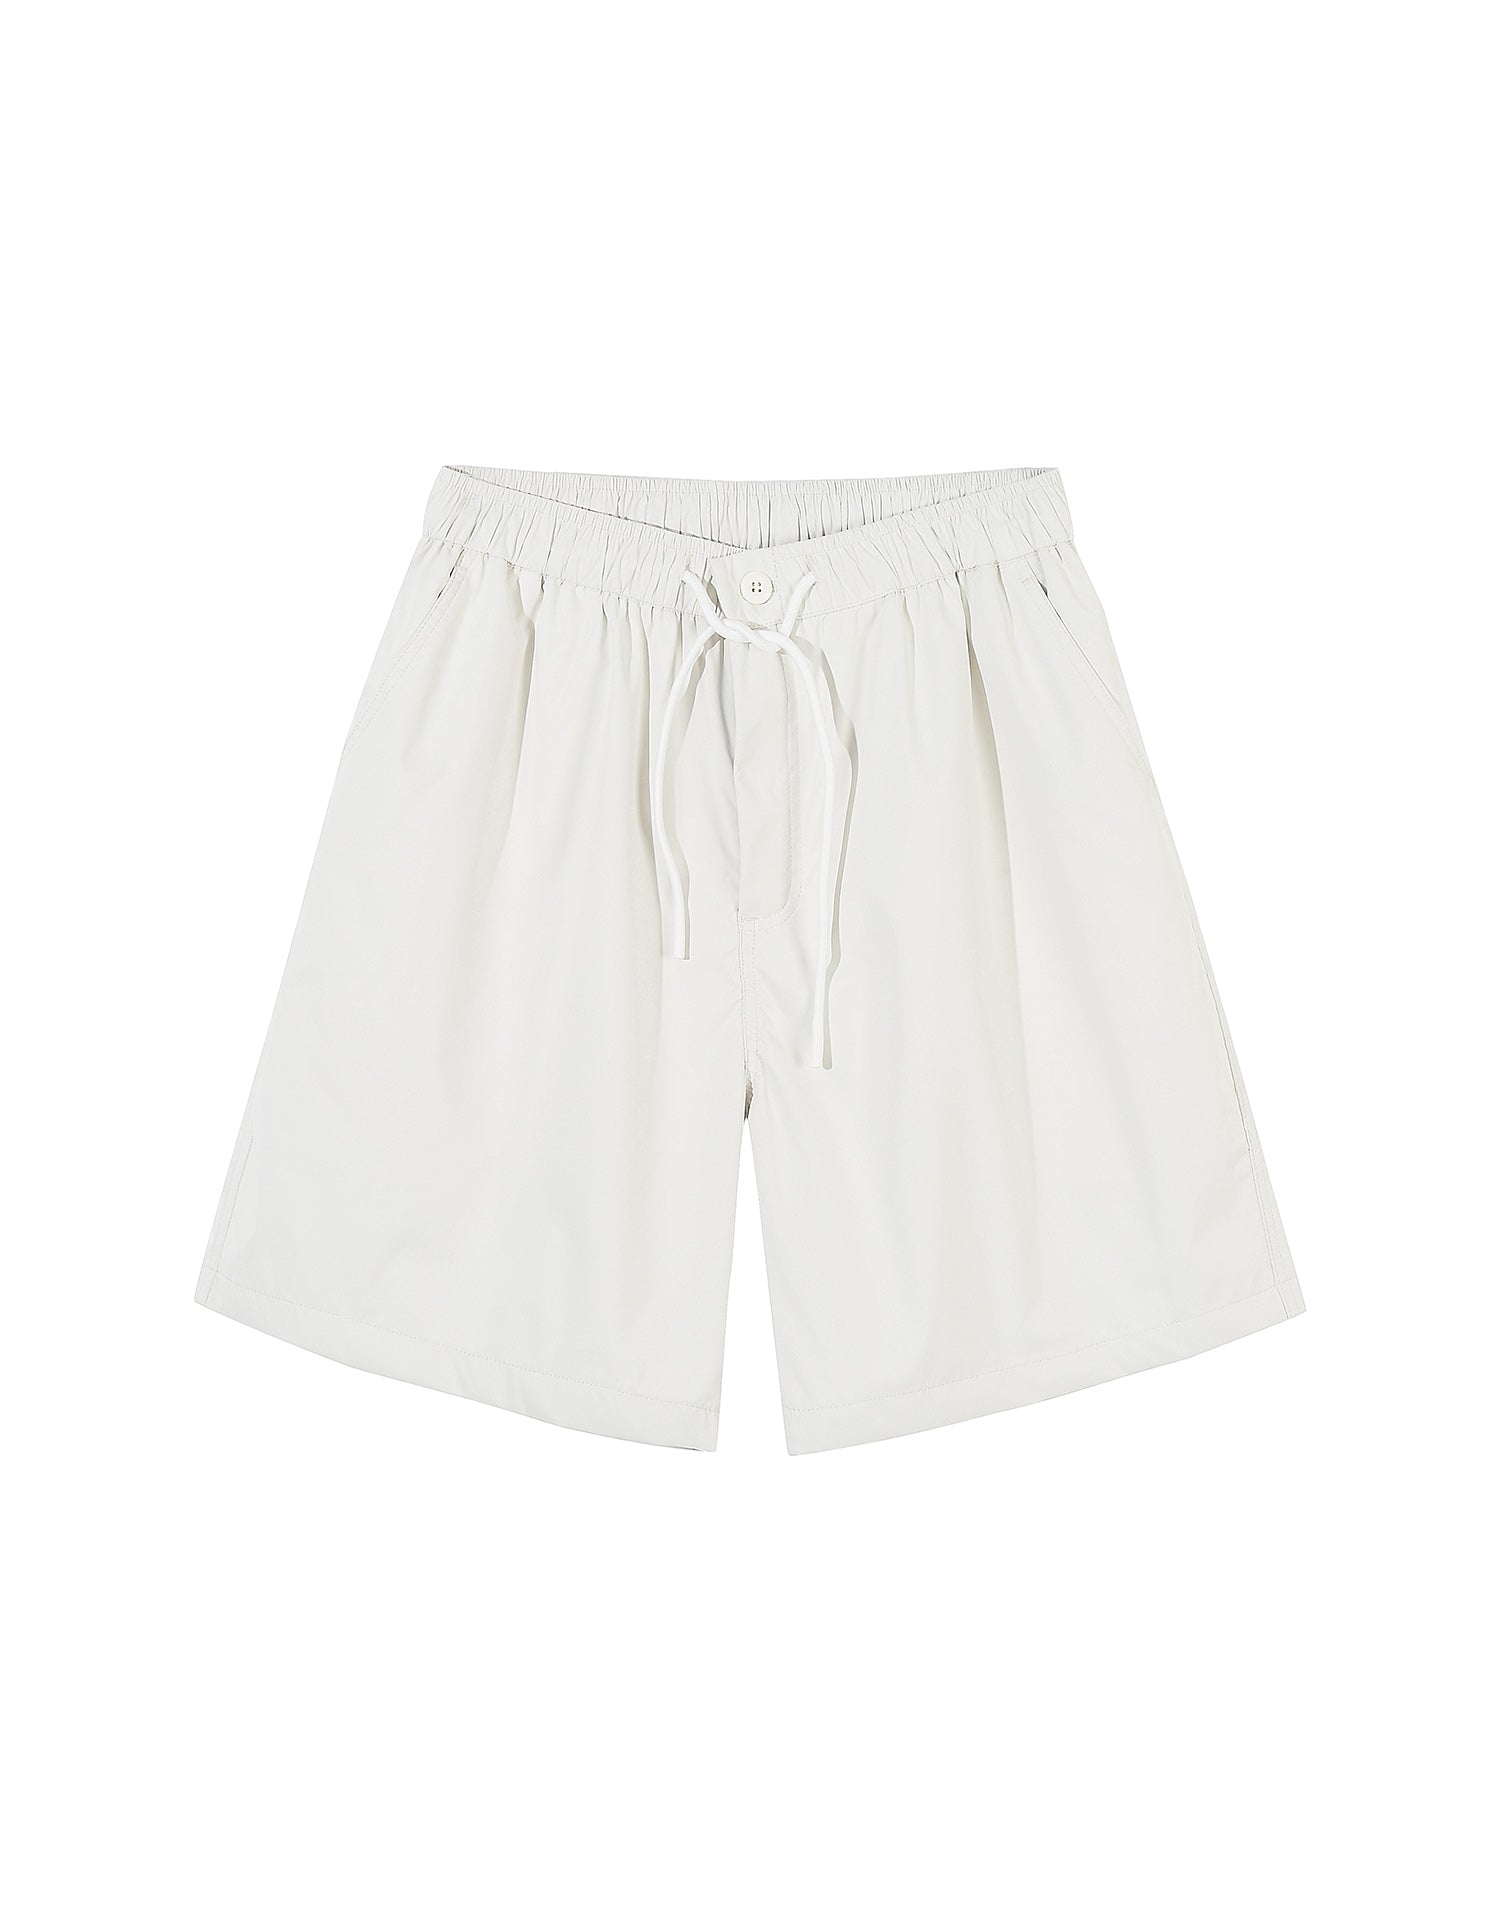 TopBasics Outdoor Plain Shorts